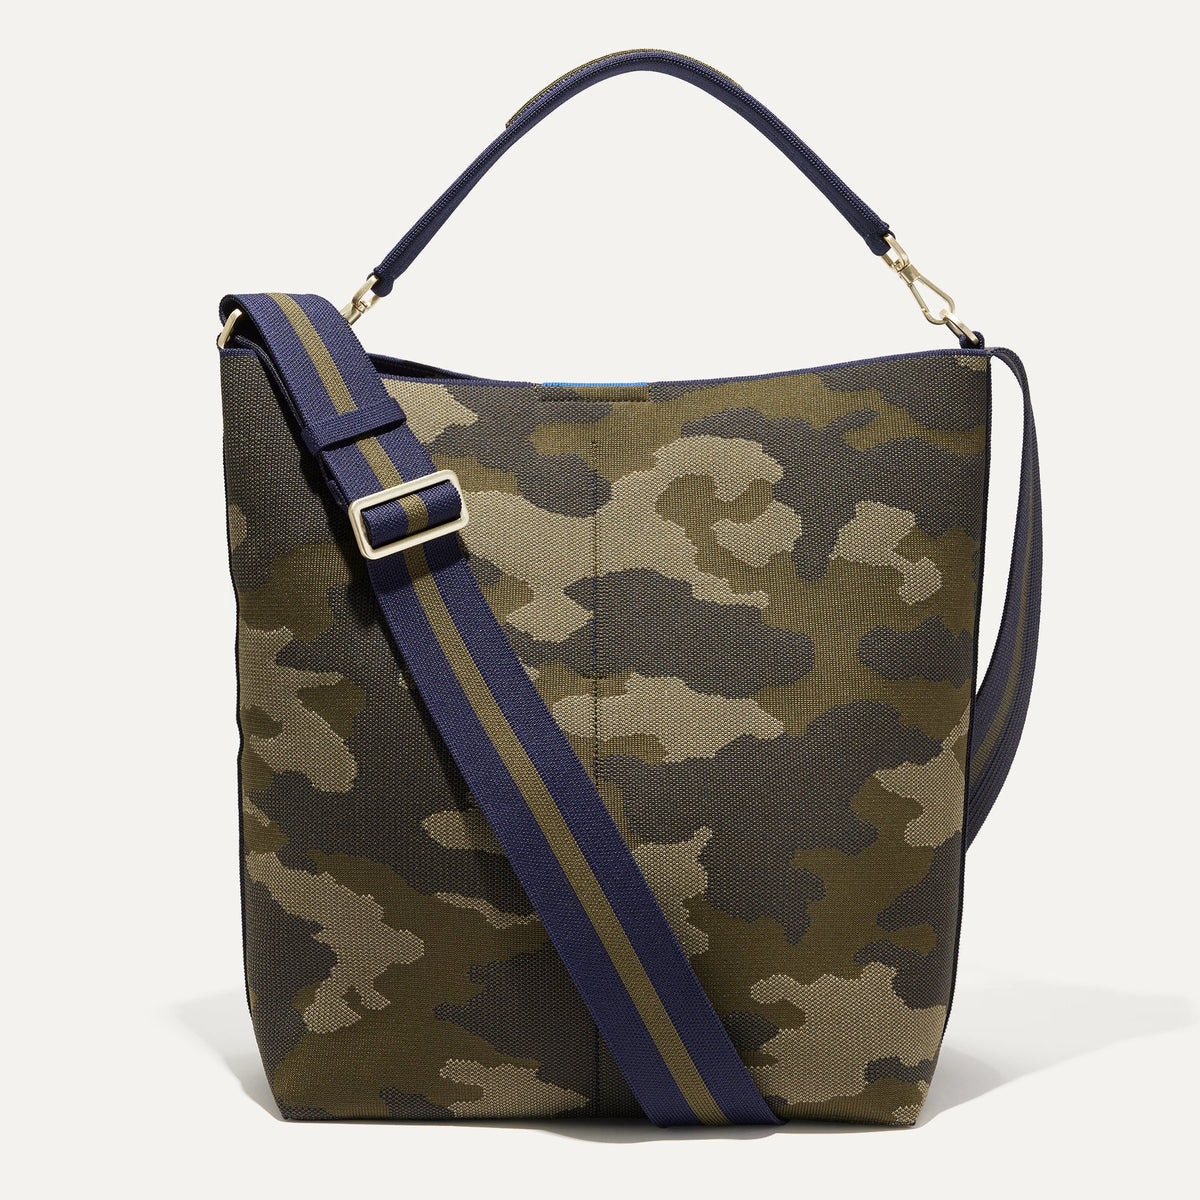 Louis Vuitton Women's Bucket Bags - Bags